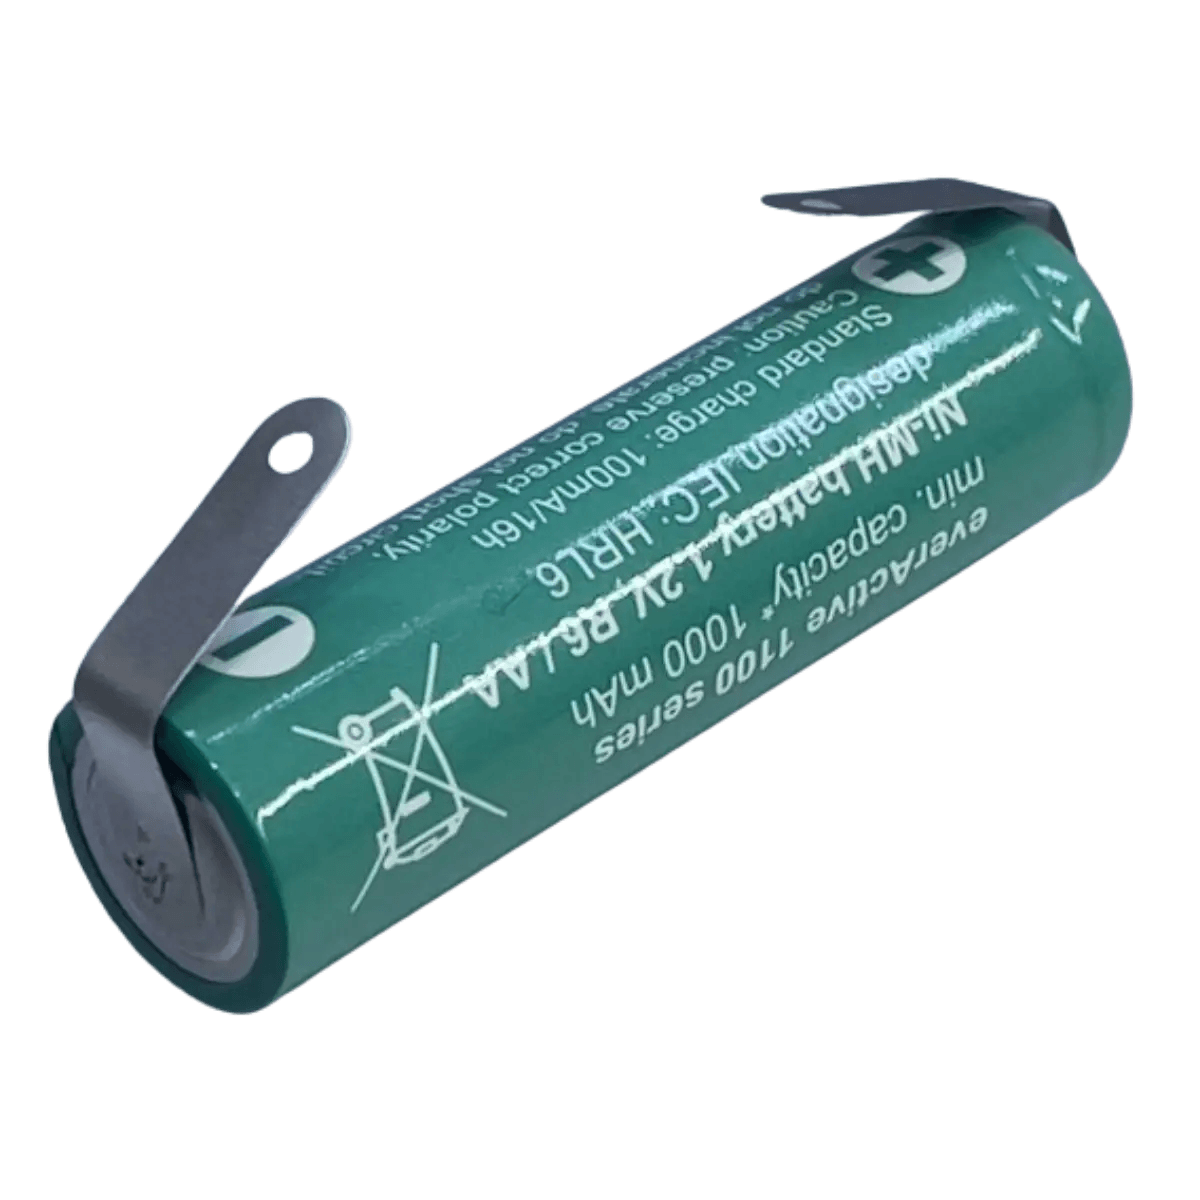 Batterie AA Ni-Mh 1.2V 1000mAh